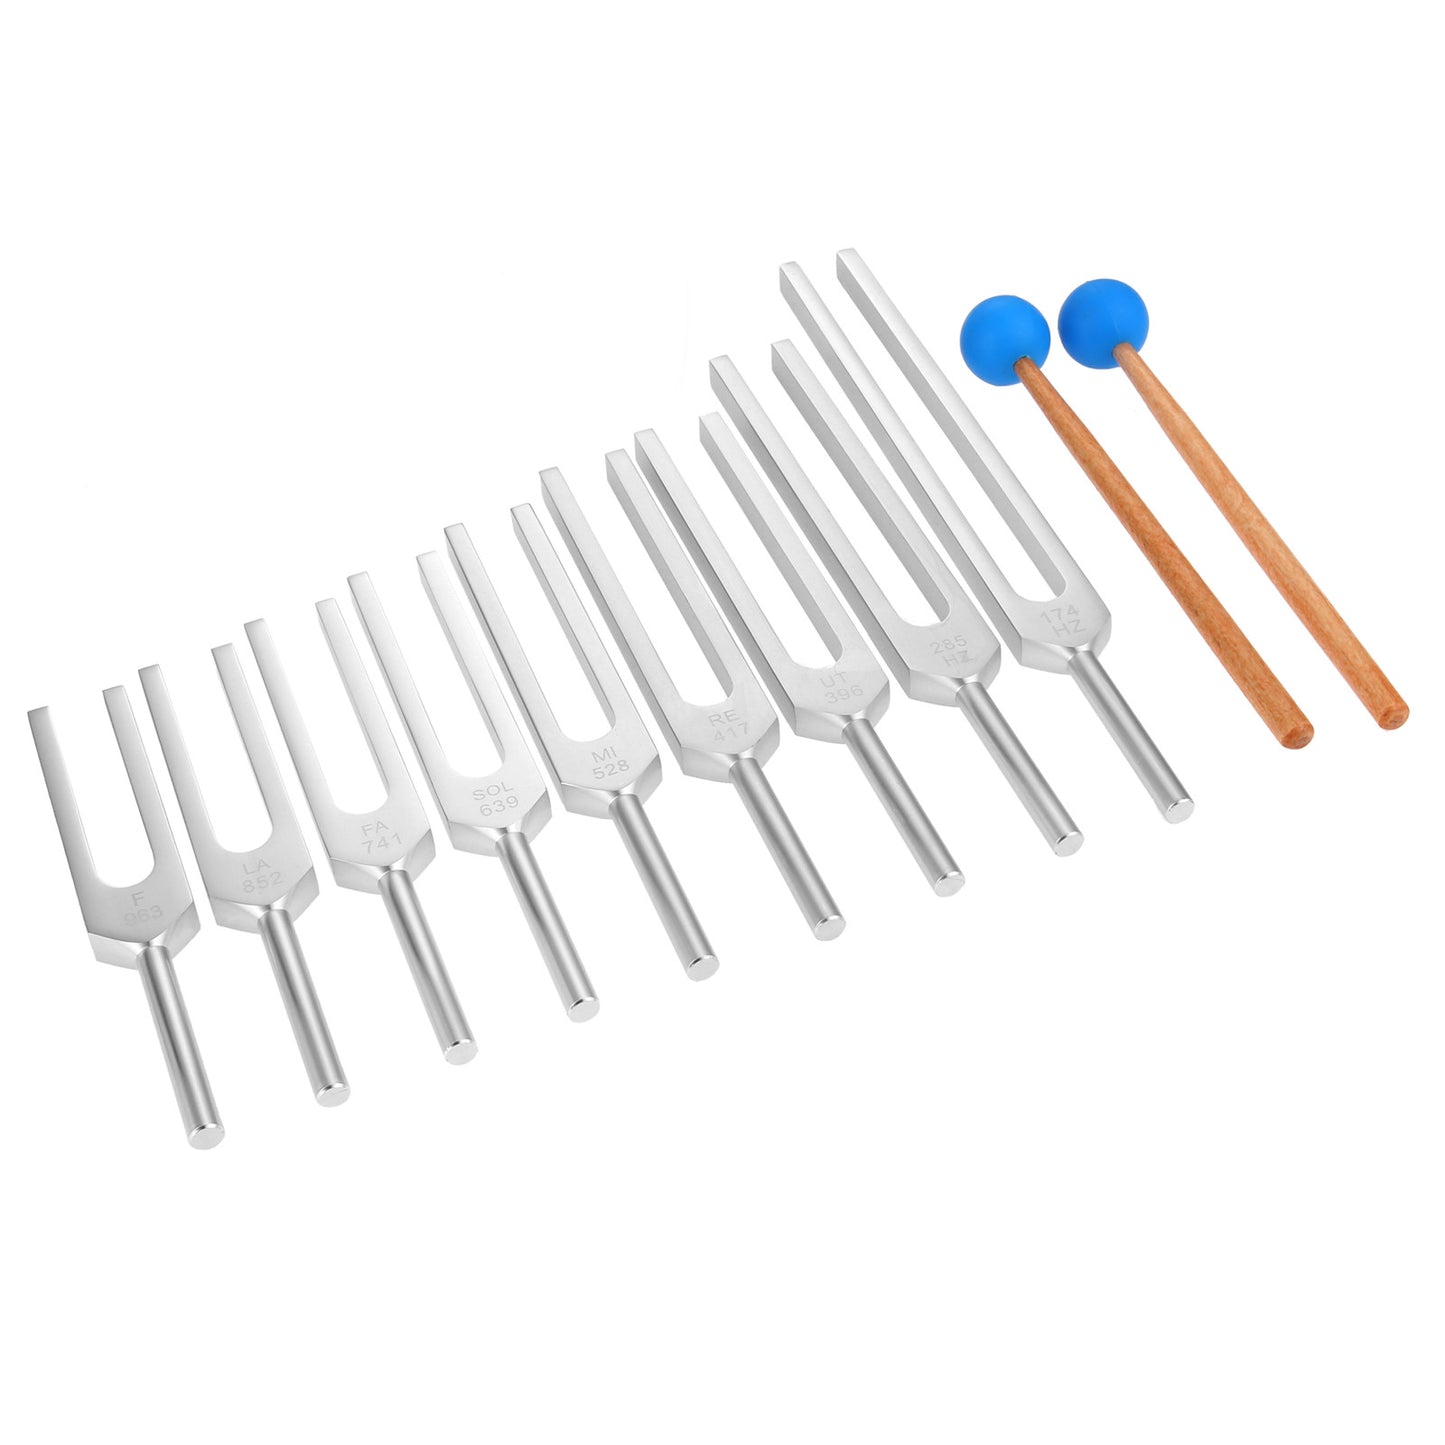 Healing Vibration Solfeggio Tuning Forks set of 9